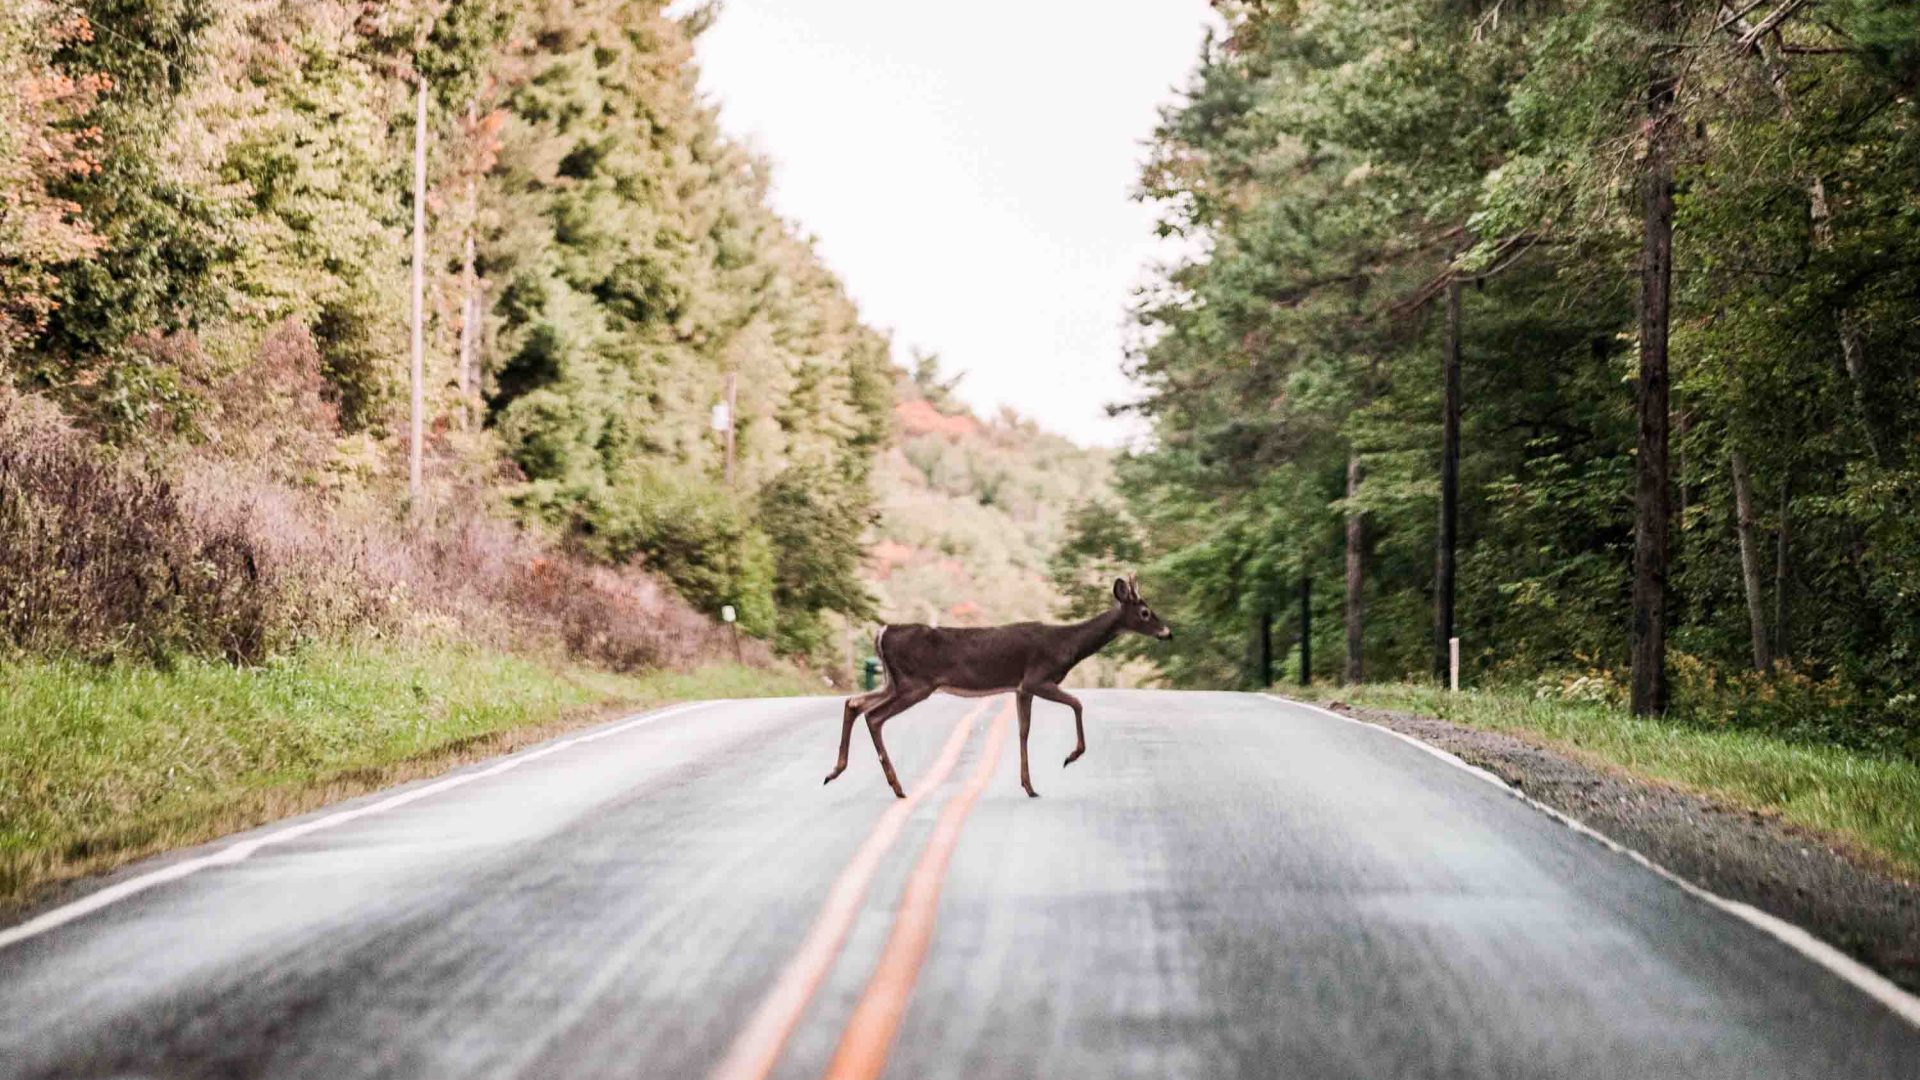 A deer crosses the road.